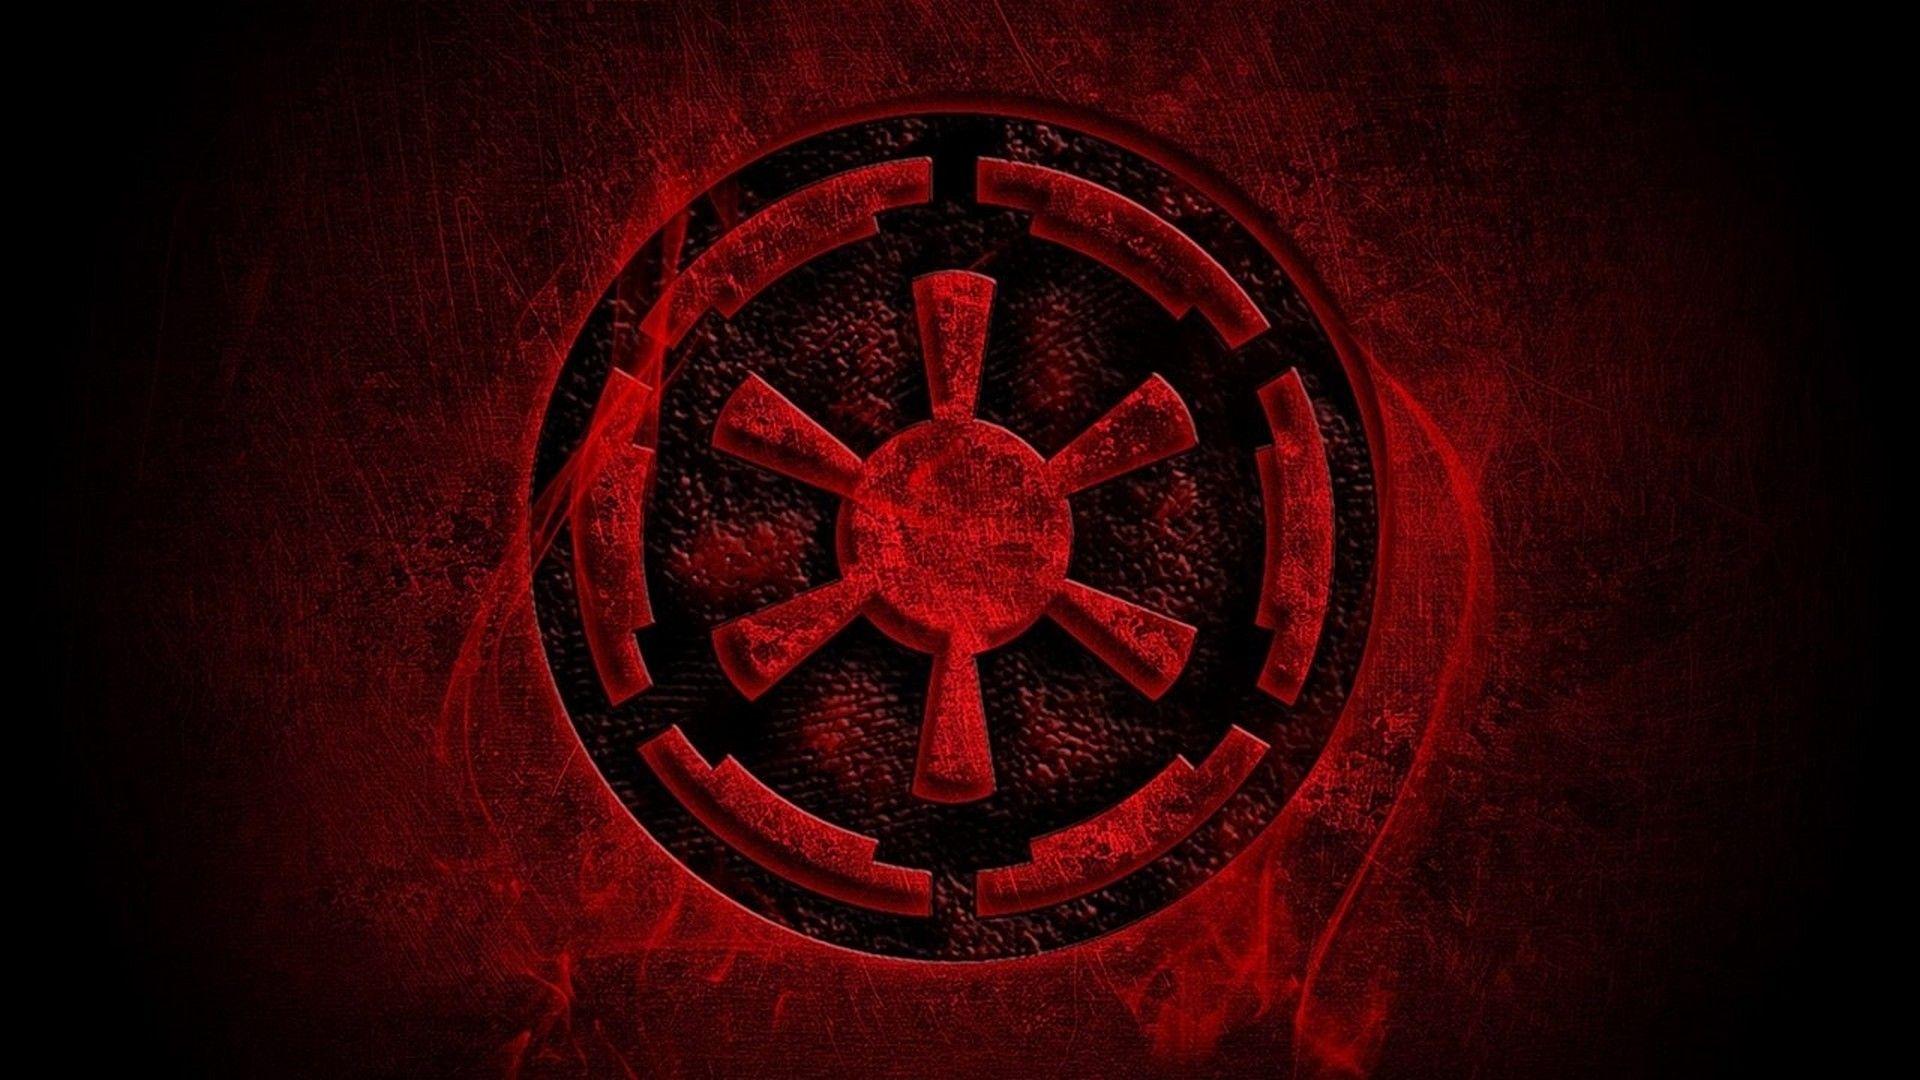 Star Wars Galactic Empire Logo Wallpaper Live Wallpaper HD. Star wars background, Star wars empire logo, Star wars image